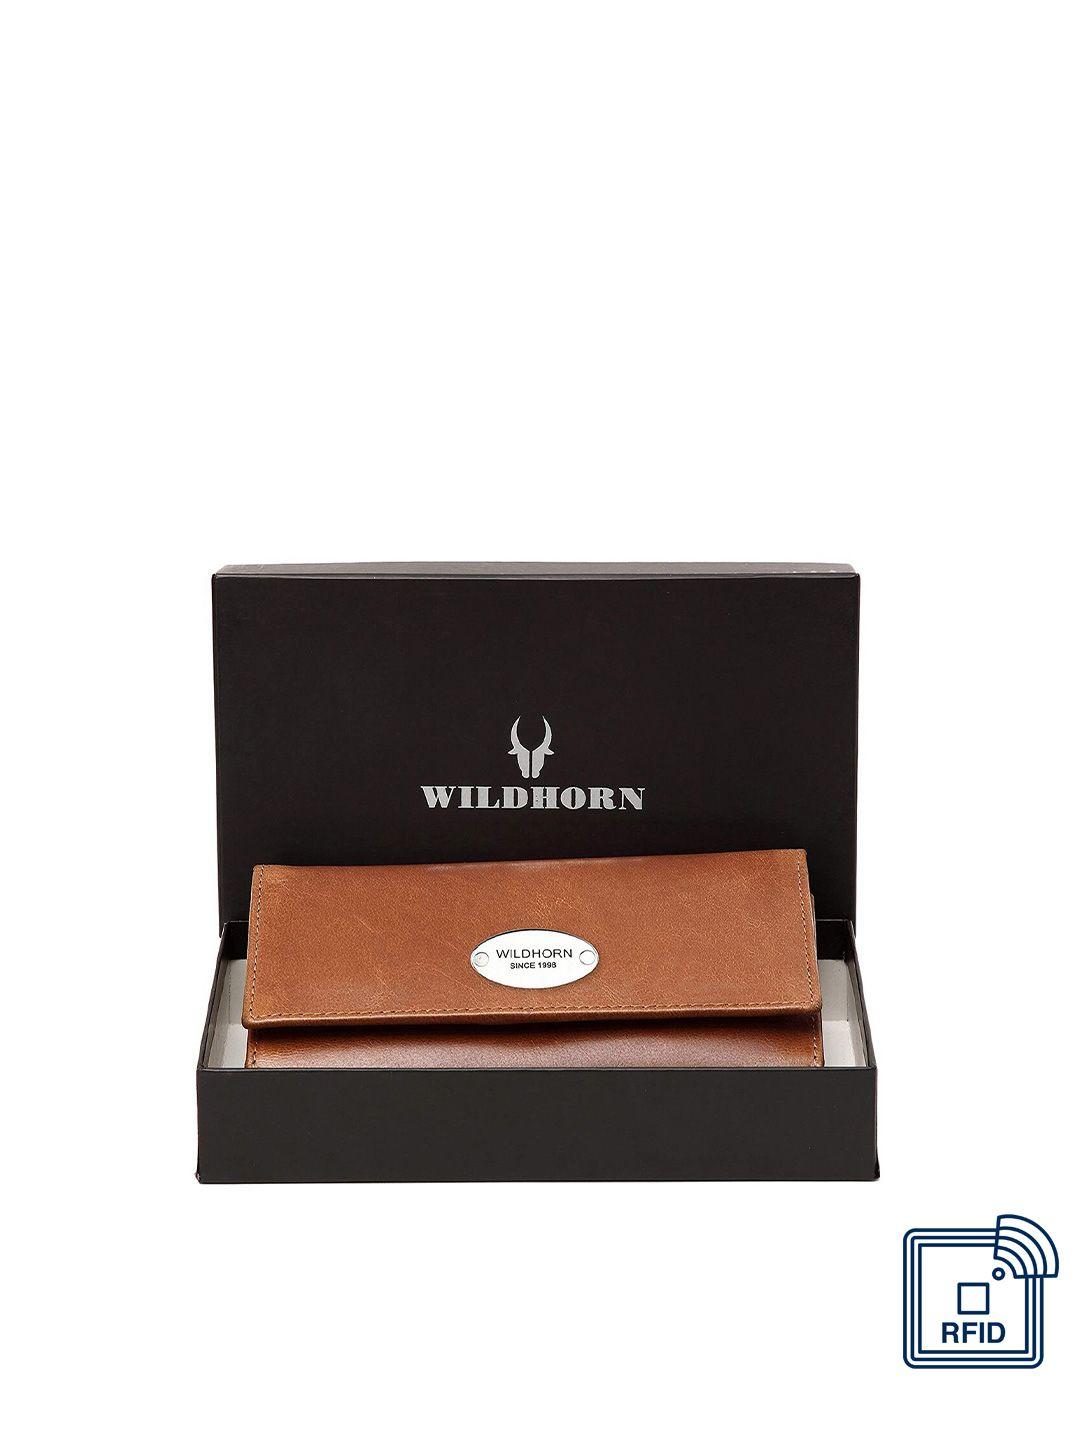 wildhorn women tan leather envelope wallet